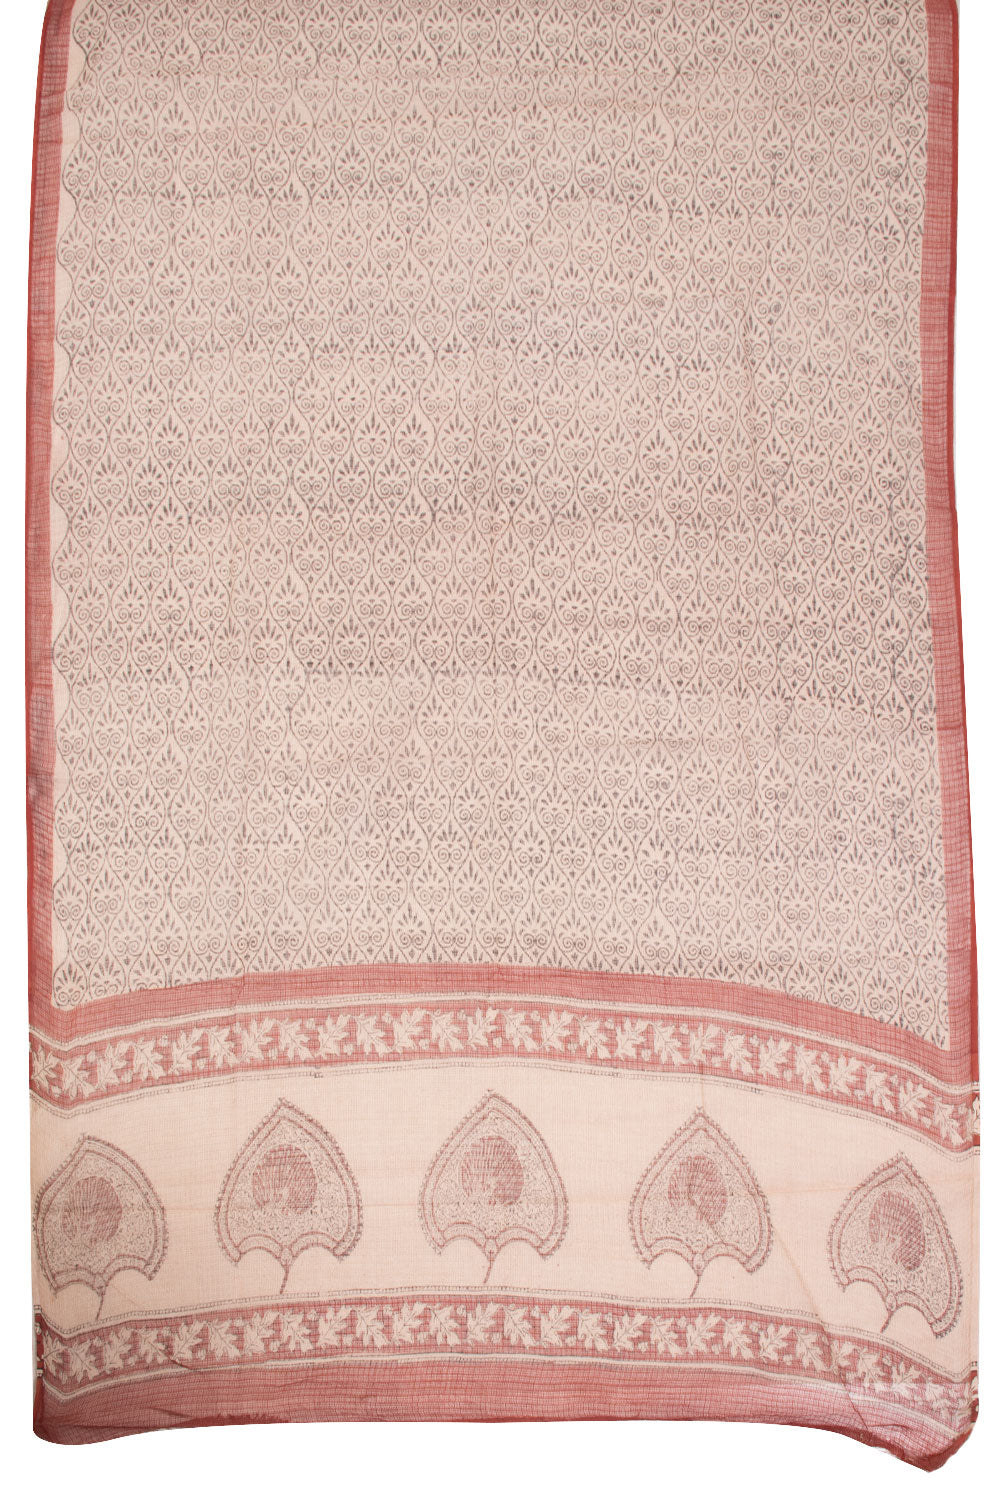 Brick Red 3-Piece Mulmul Cotton Salwar Suit Material With Kota Dupatta